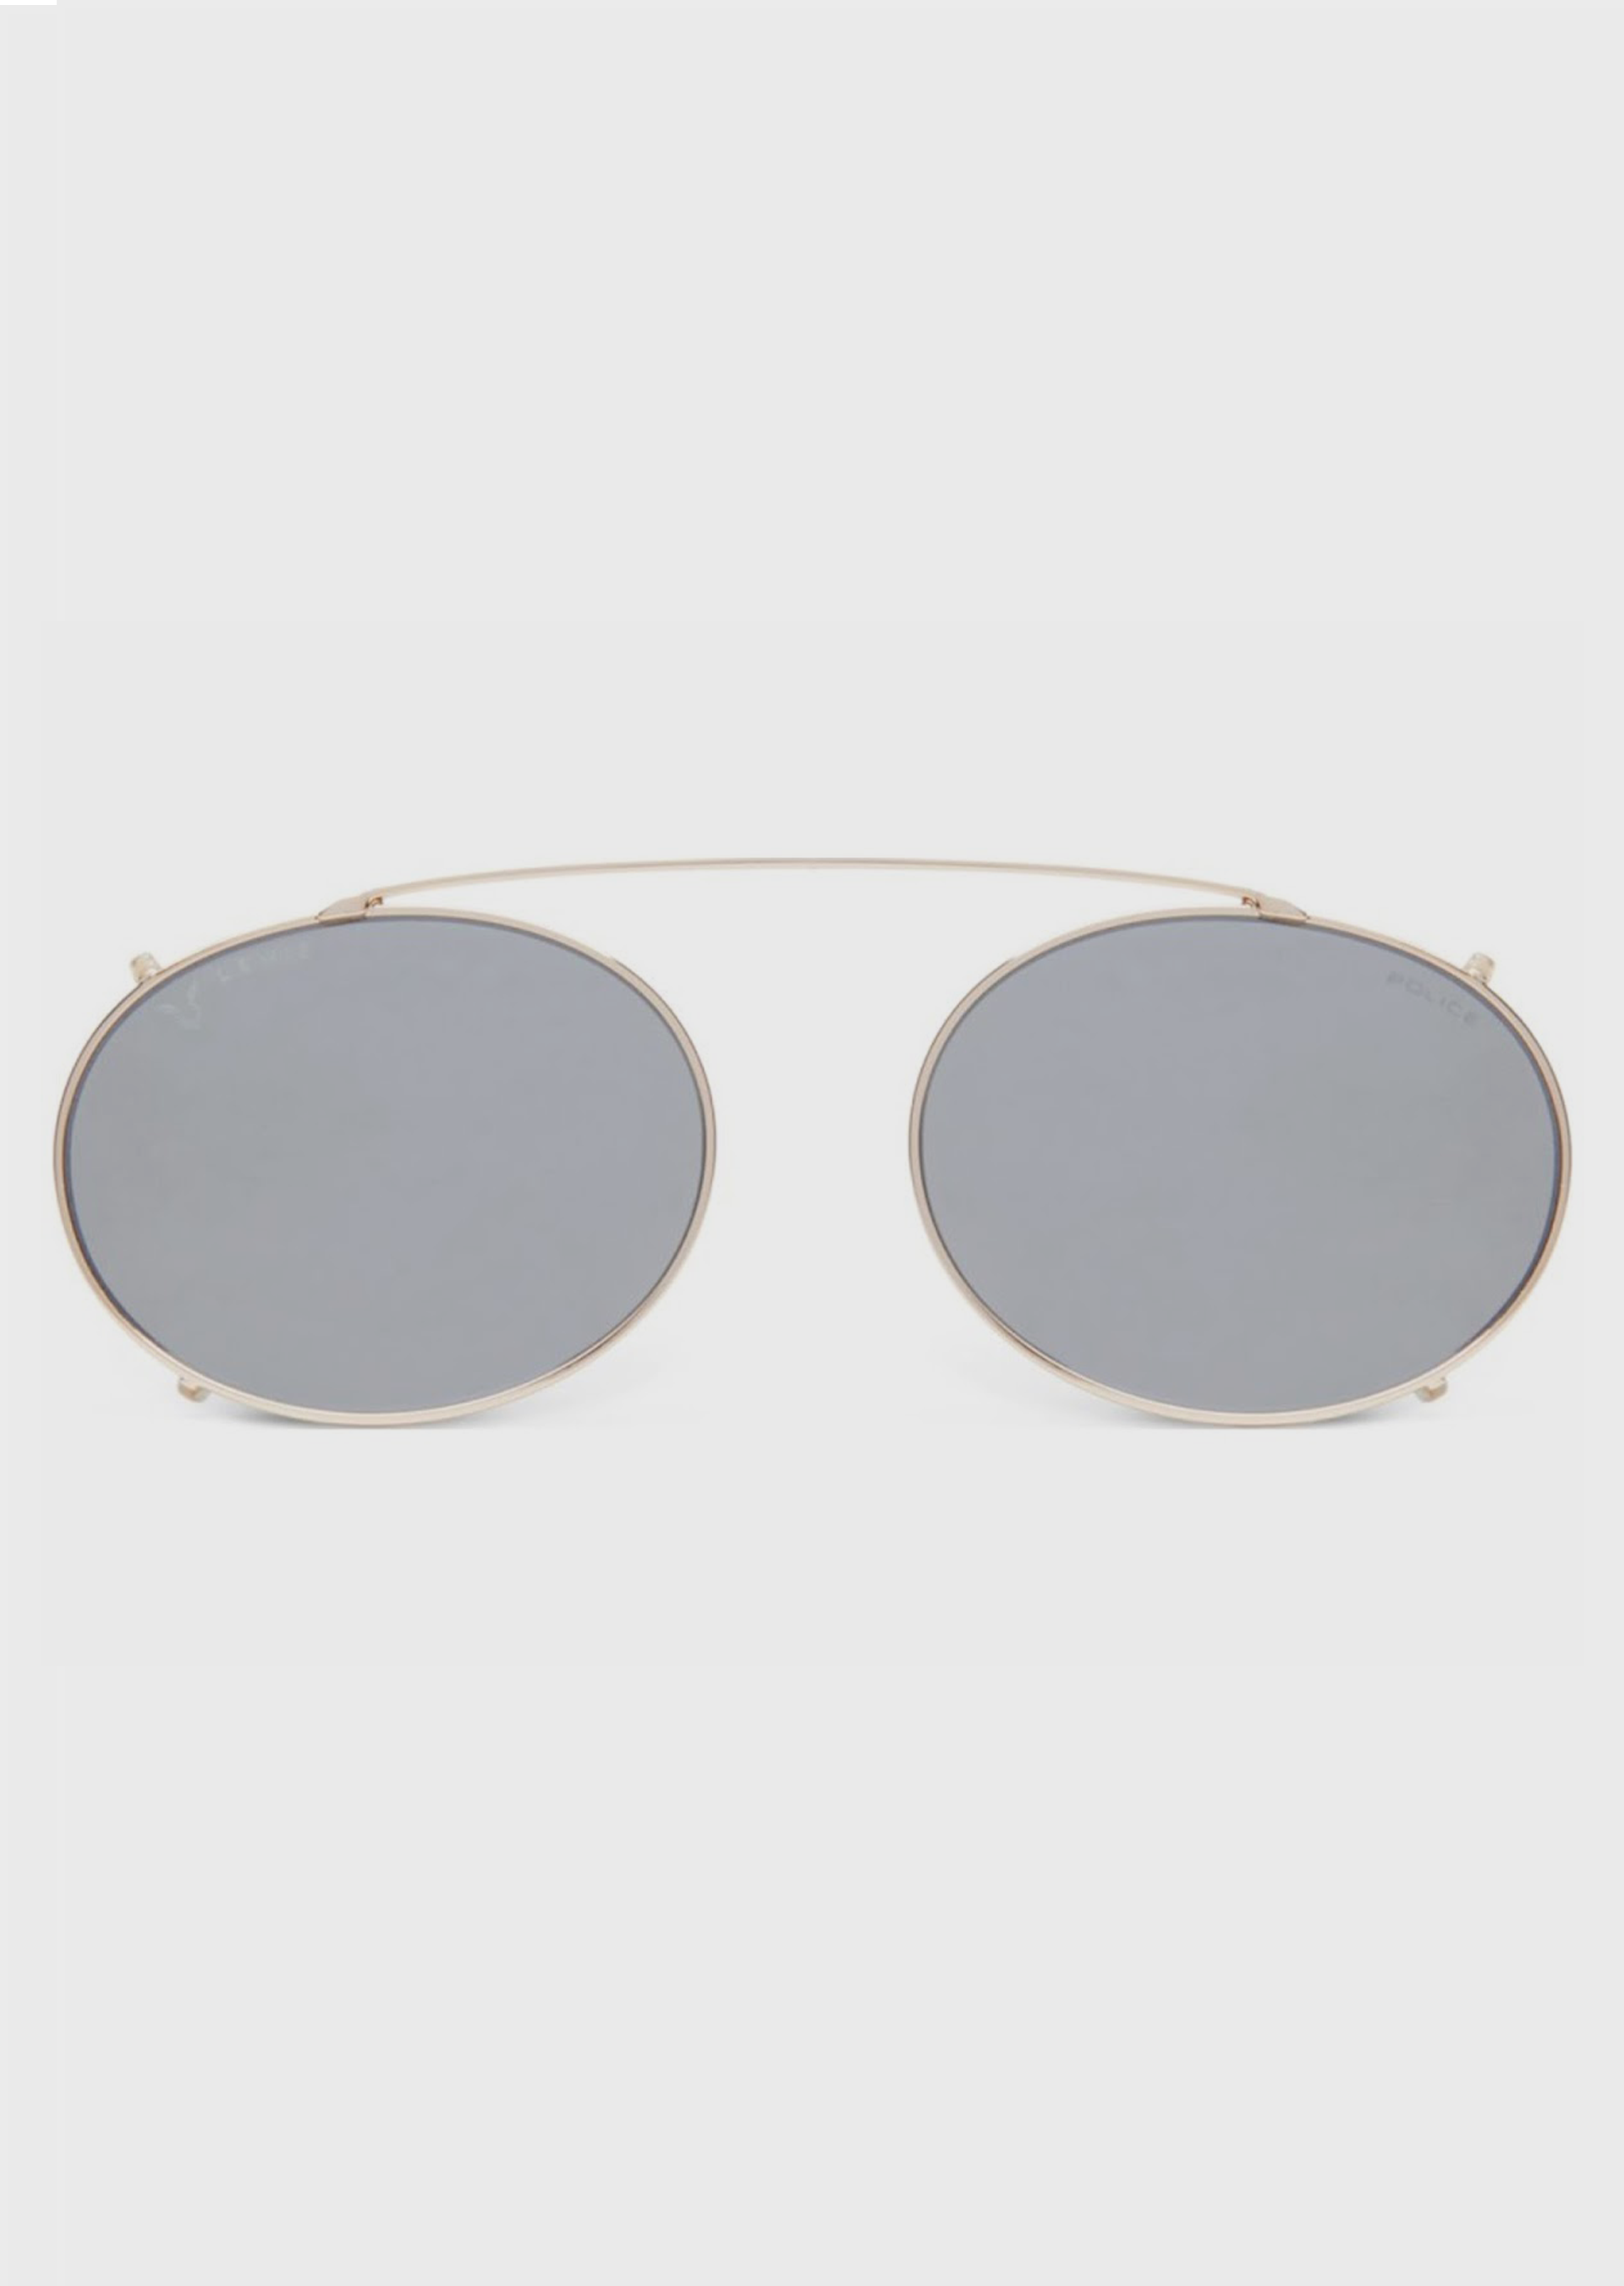 mens men's police apla29-50300x lewis hamilton sunglasses - gold / one size